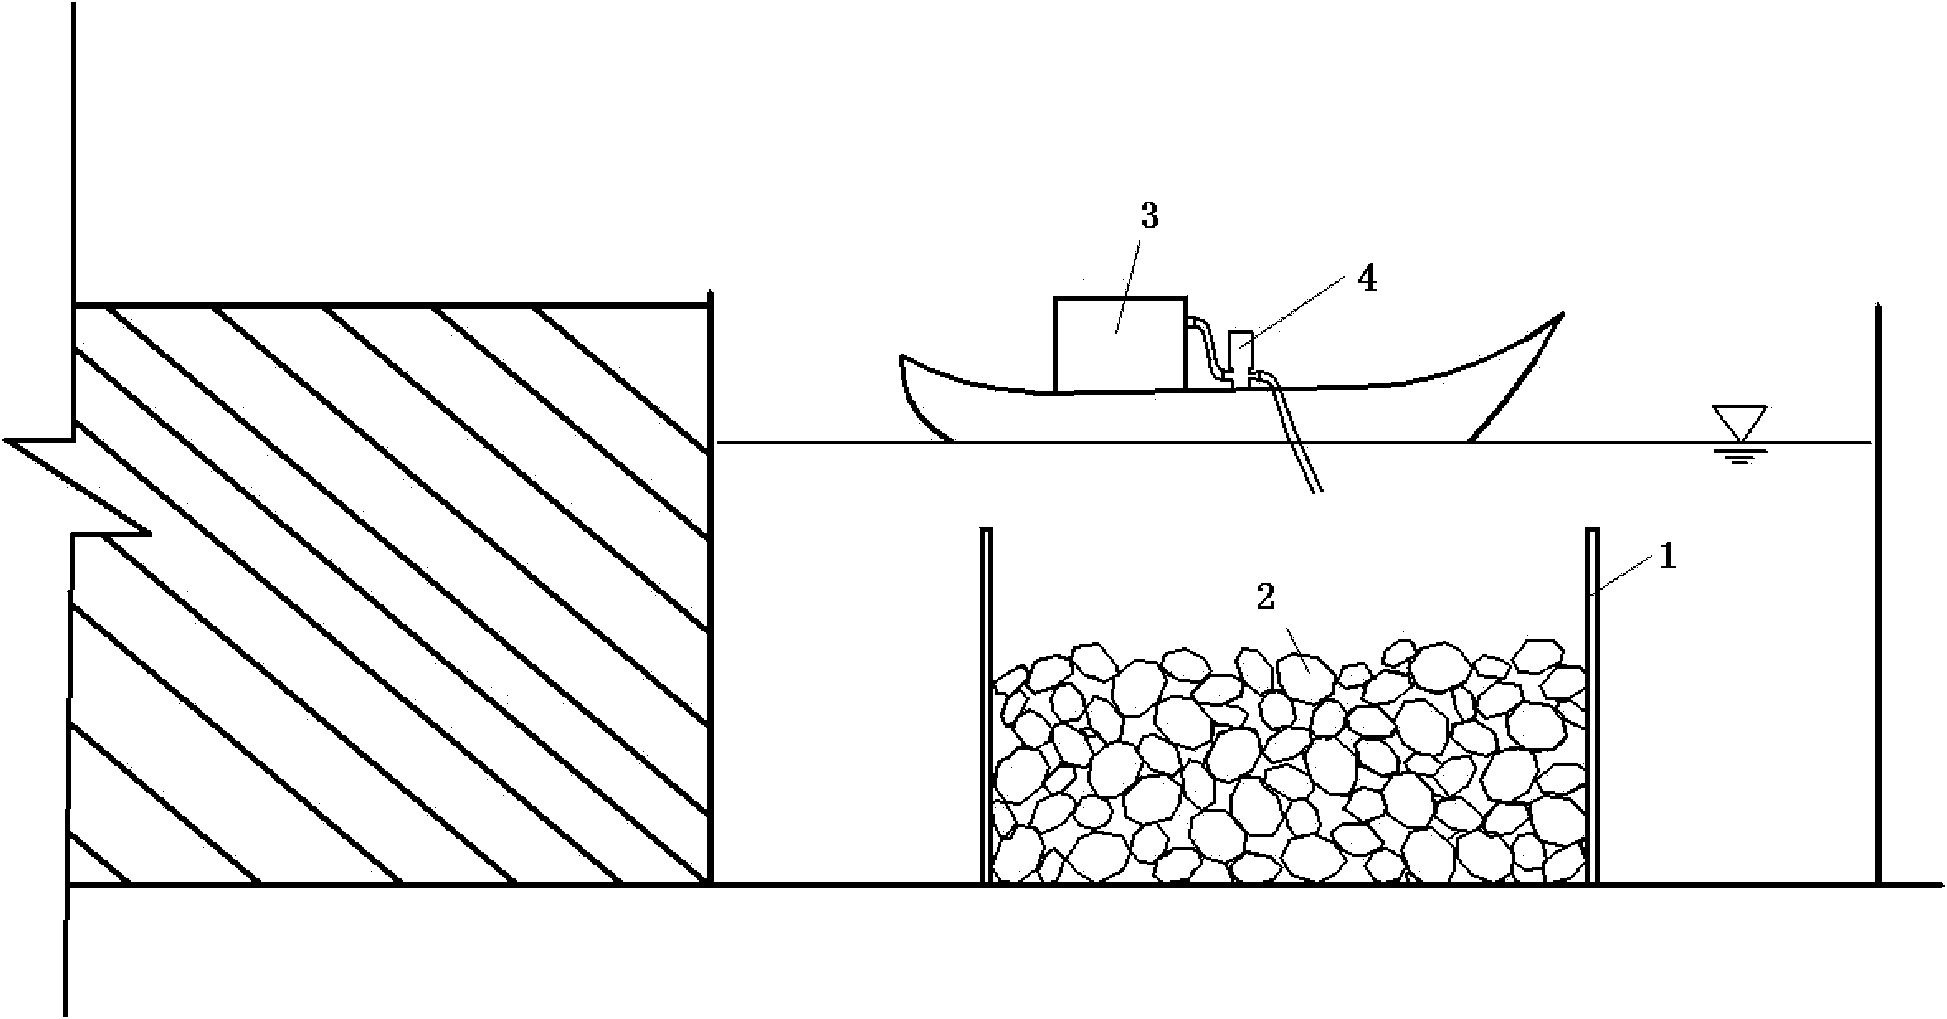 Construction method of underwater rockfill concrete